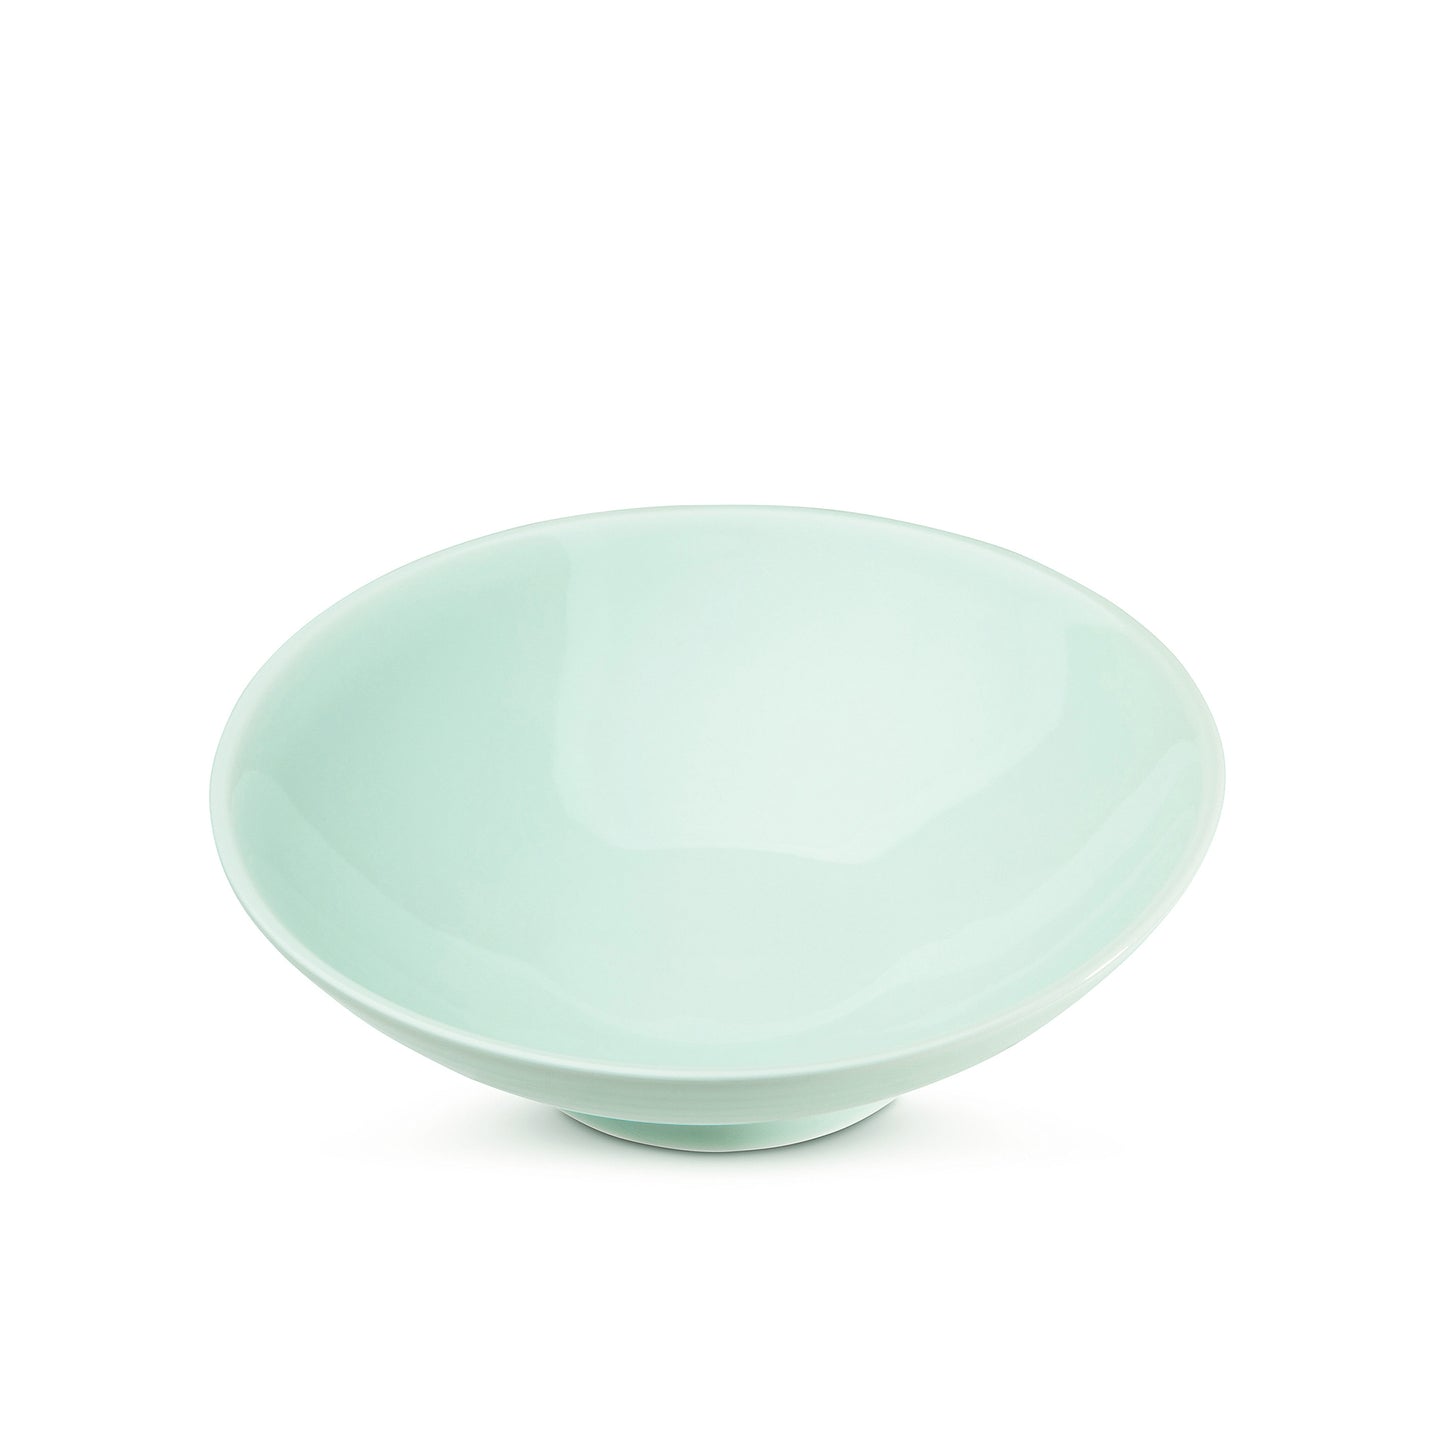 7" green celadon porcelain bowl, 45 degree angle view, media 3 of 5